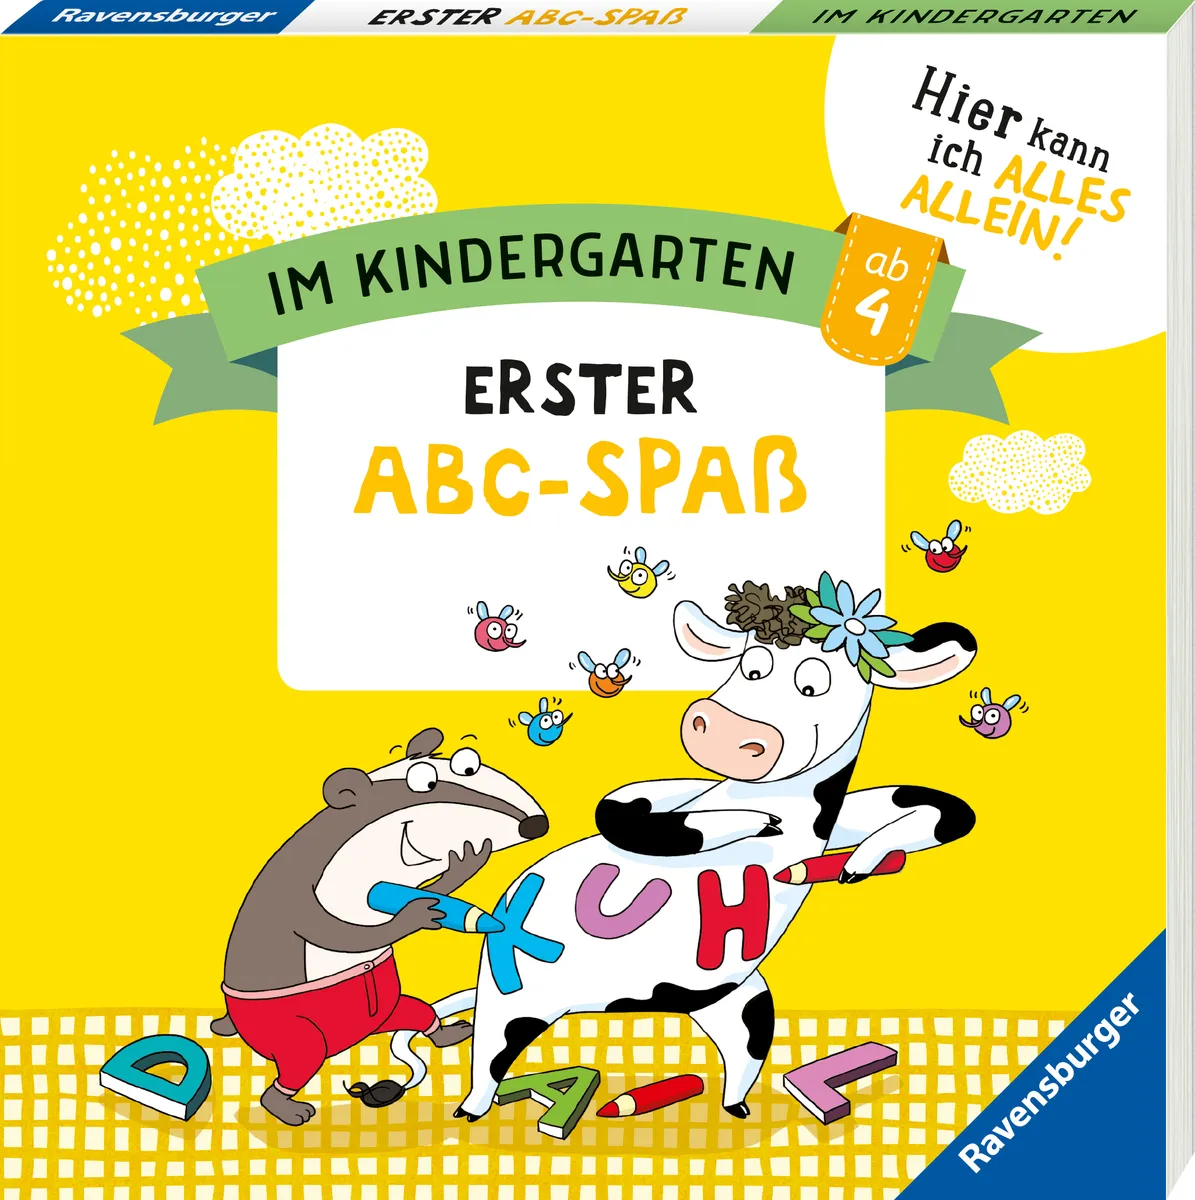 Im Kindergarten: Erster fromc-Spaß